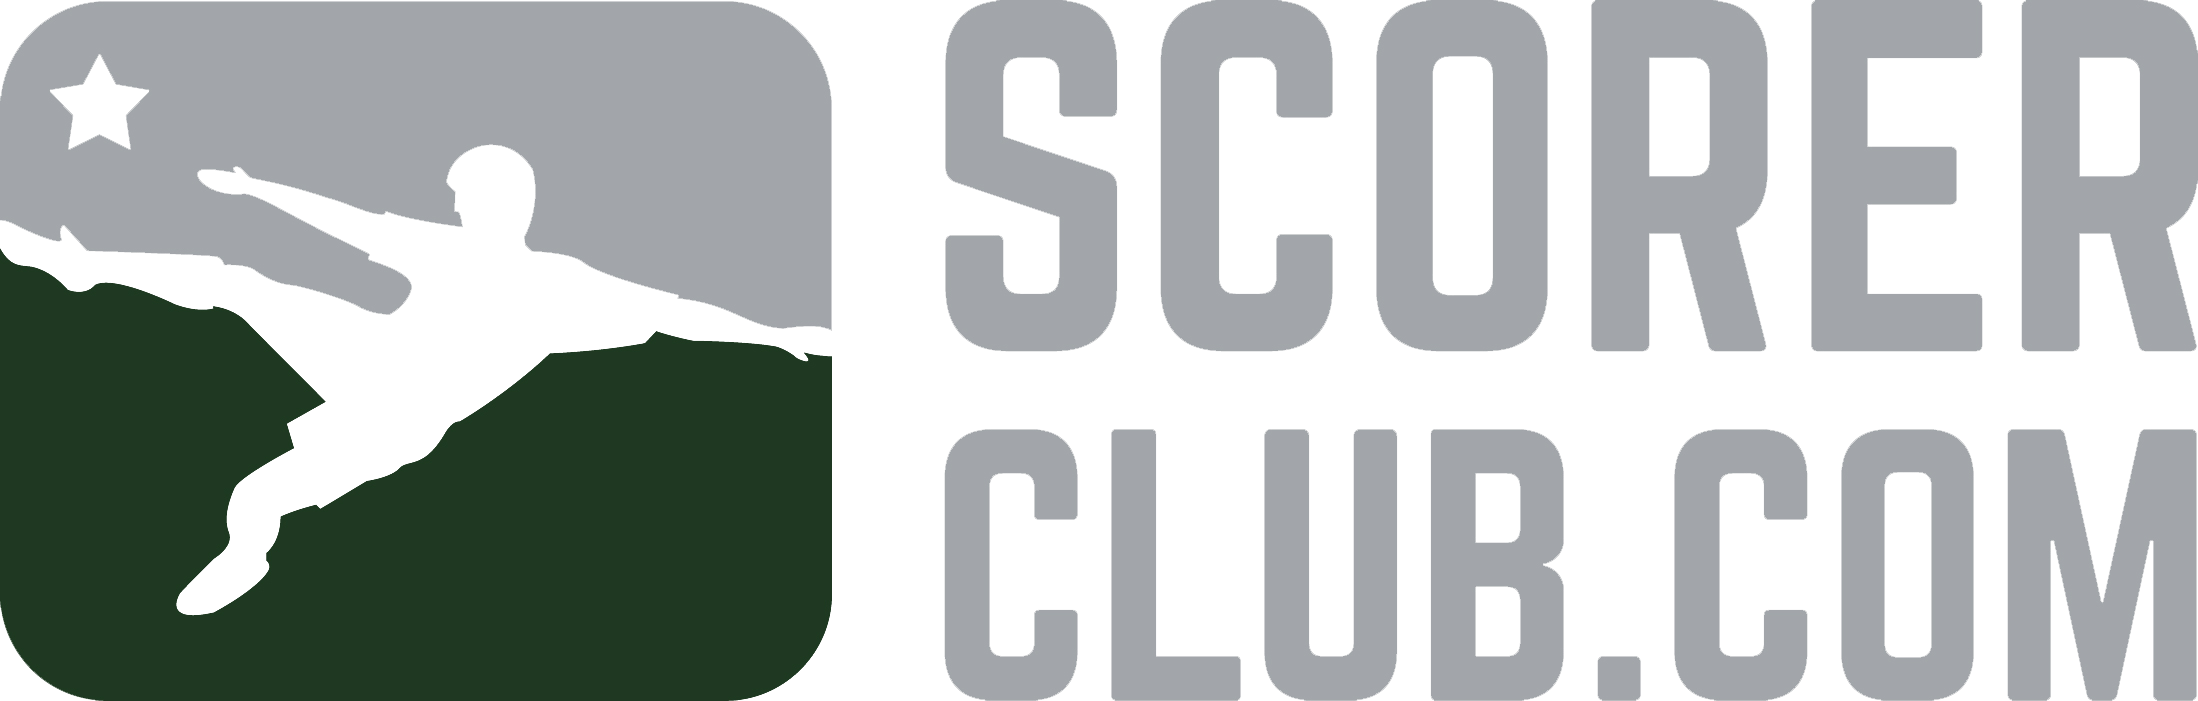 Scorer Club logo